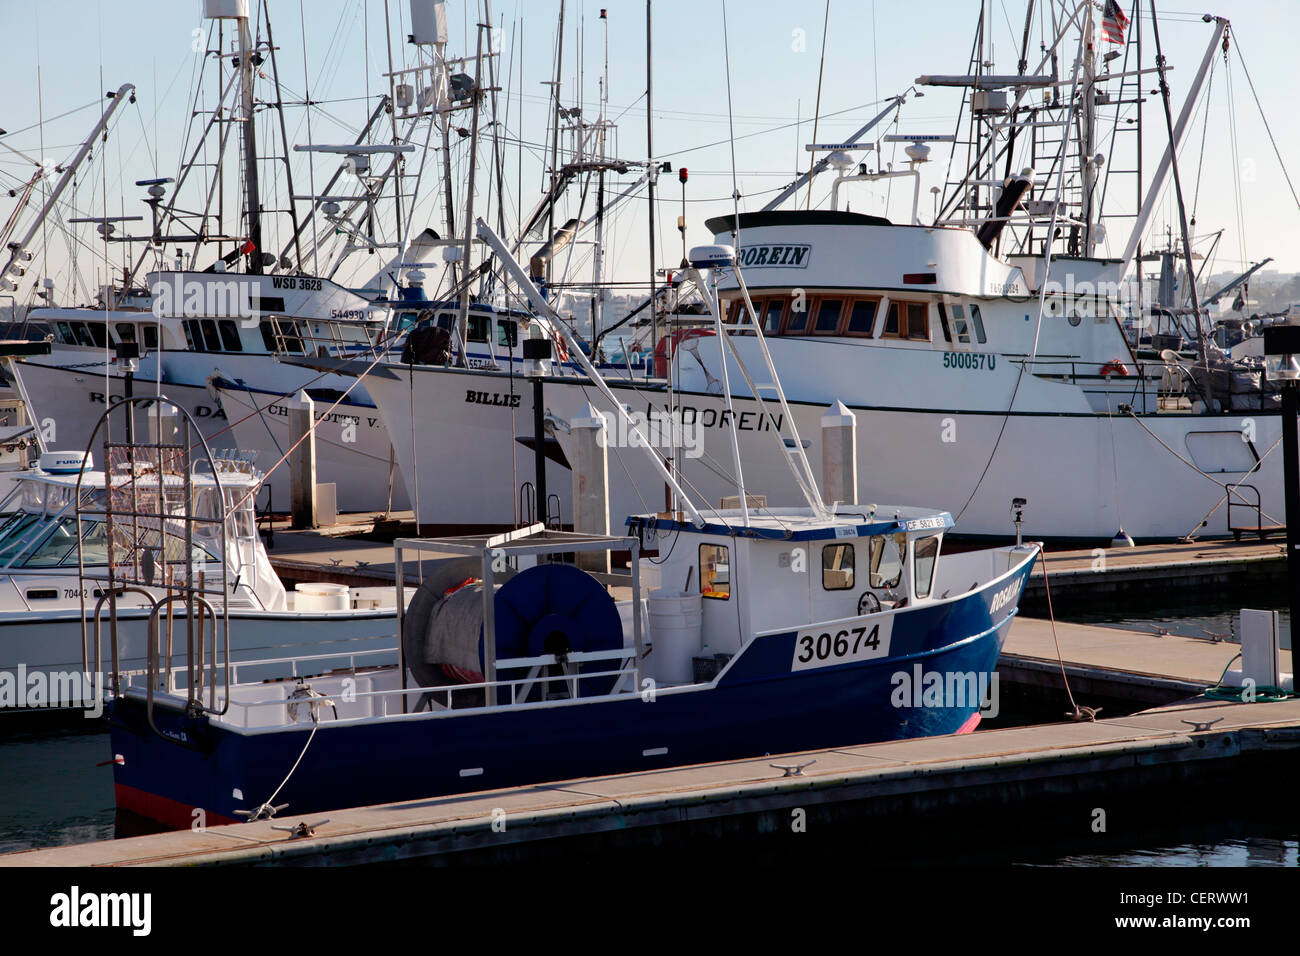 La flota pesquera de atún, San Diego, California, EE.UU. Foto de stock